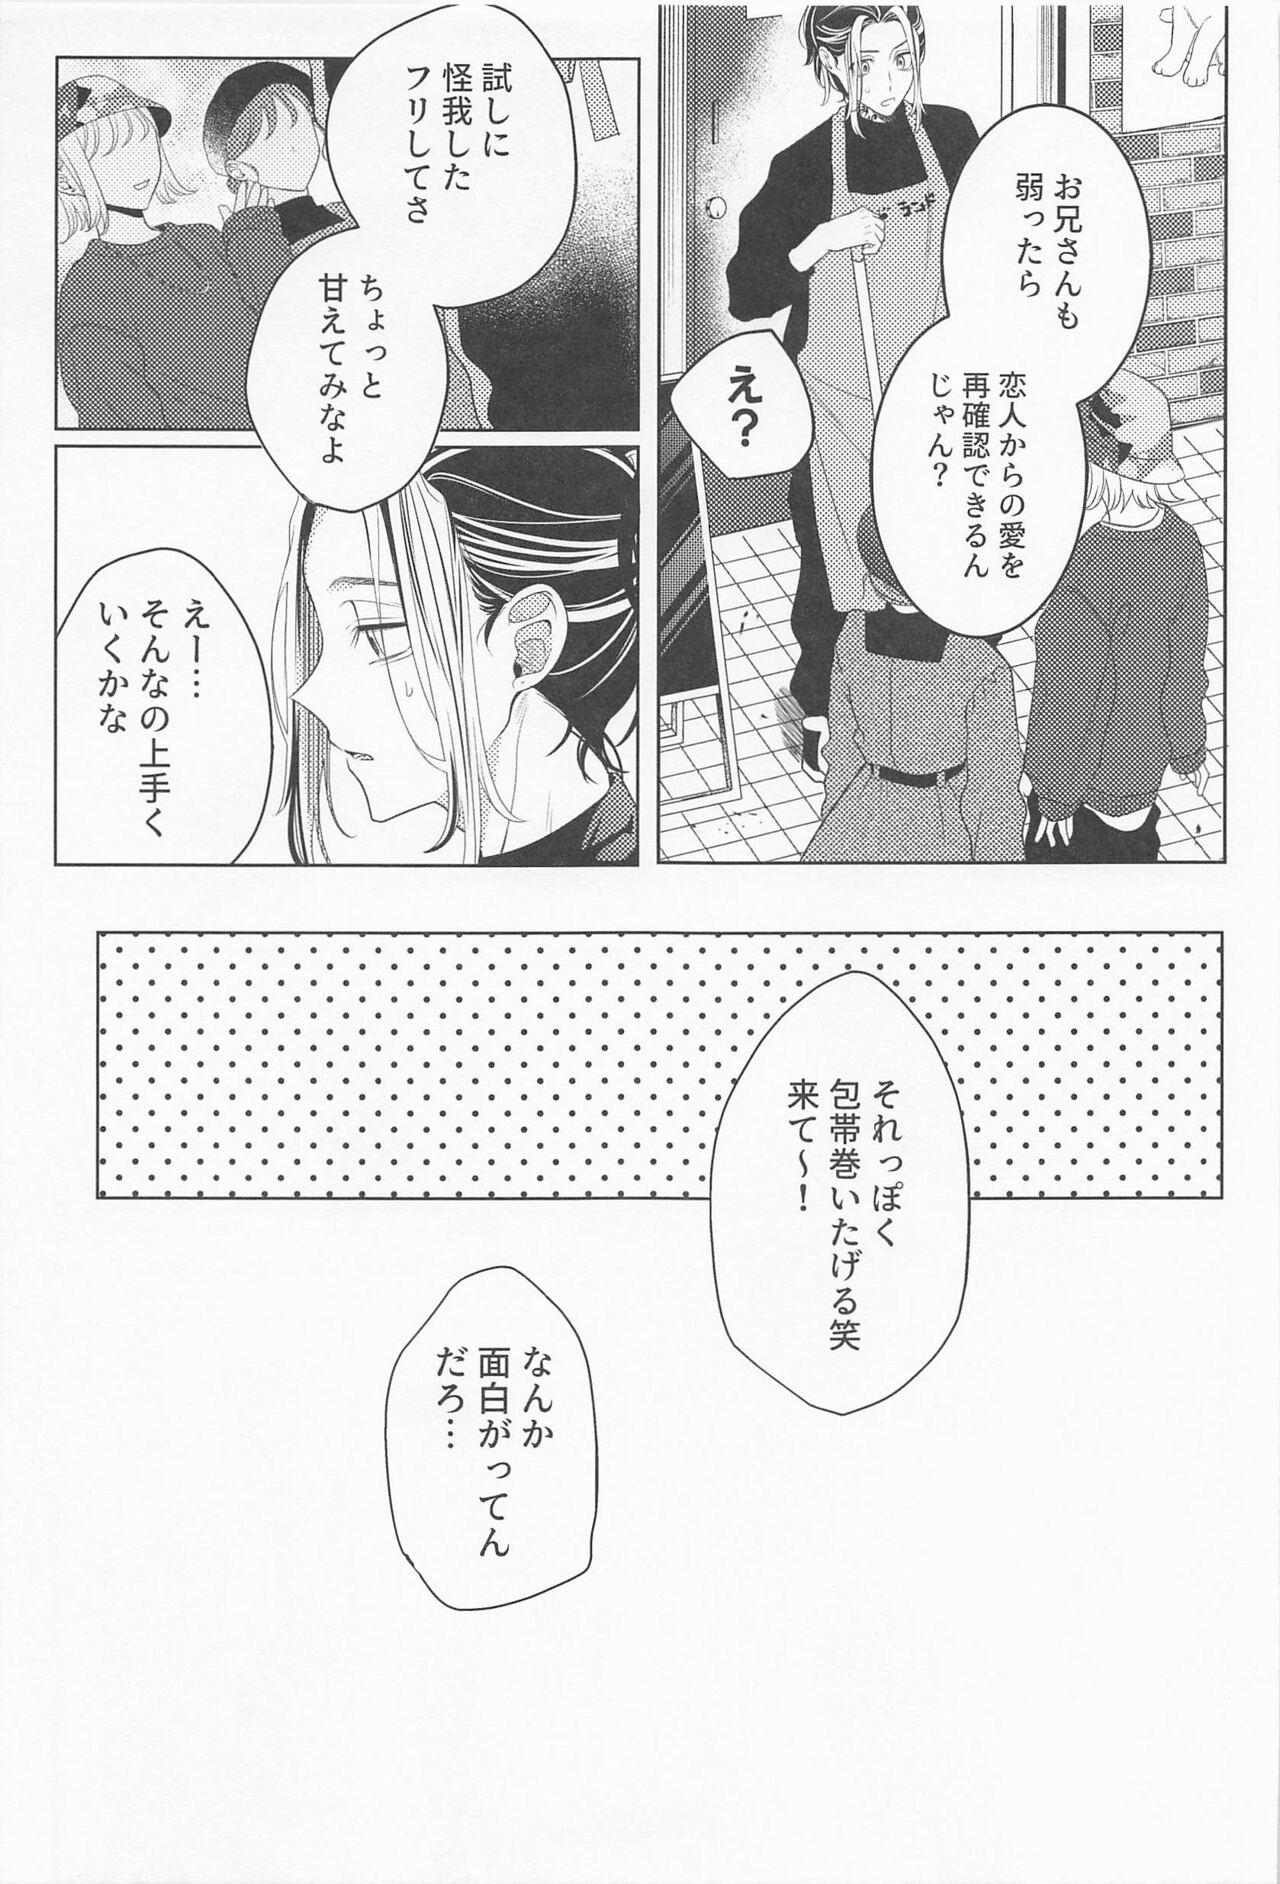 Peludo sukidakarashimpaishite - Tokyo revengers Amante - Page 6